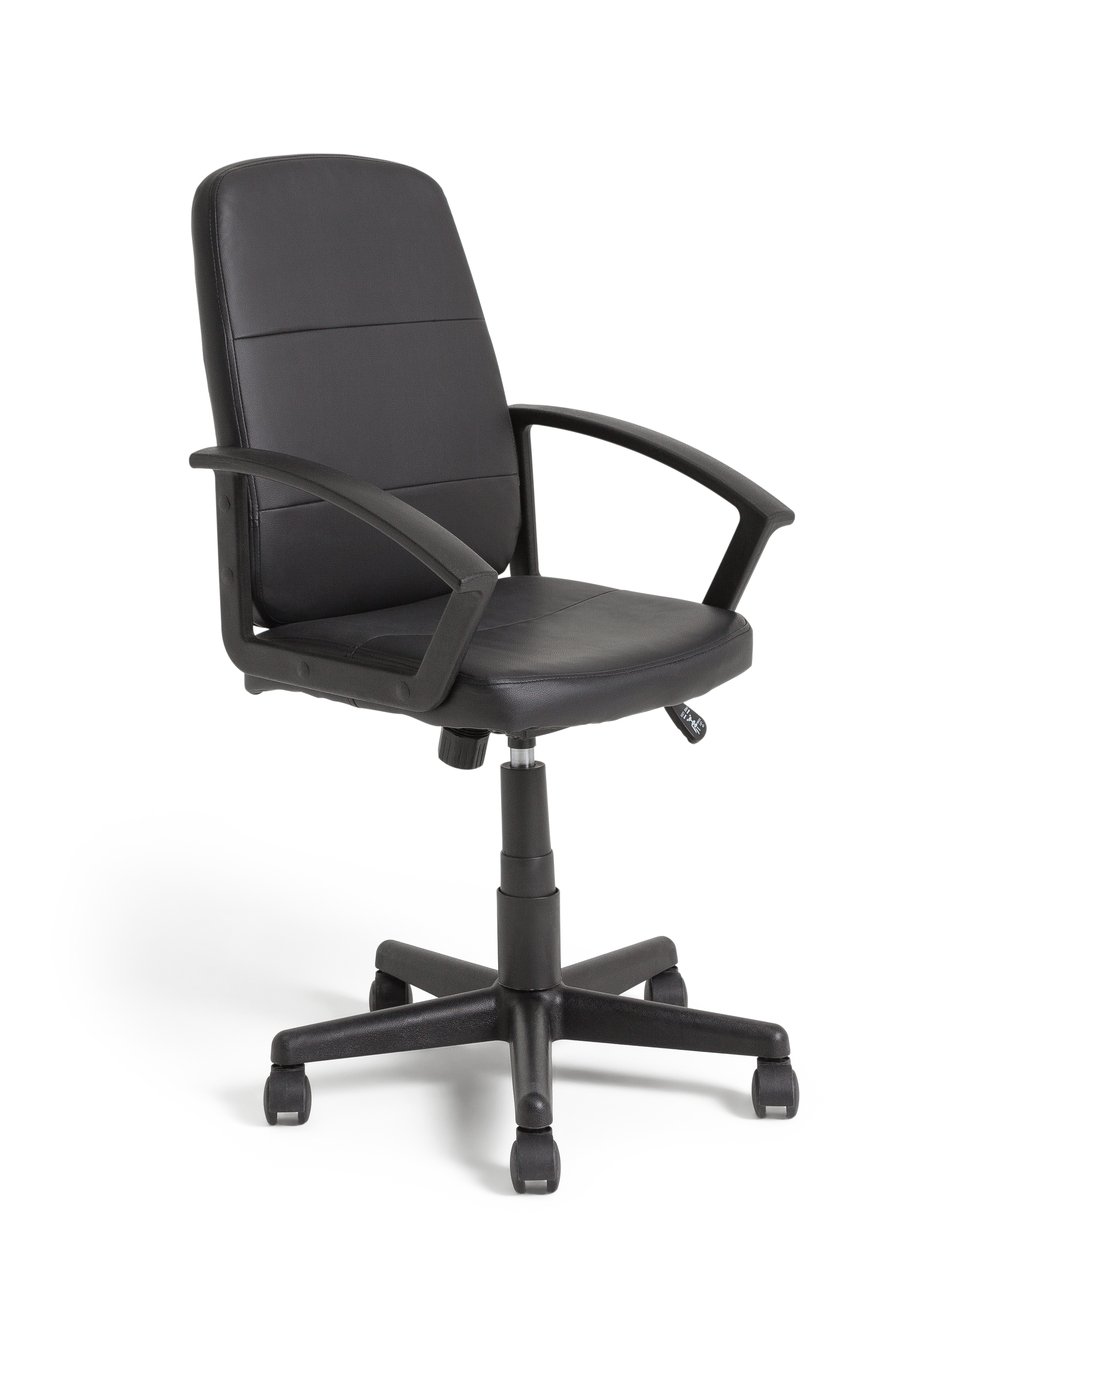 Habitat Brixham Faux Leather Office Chair - Black